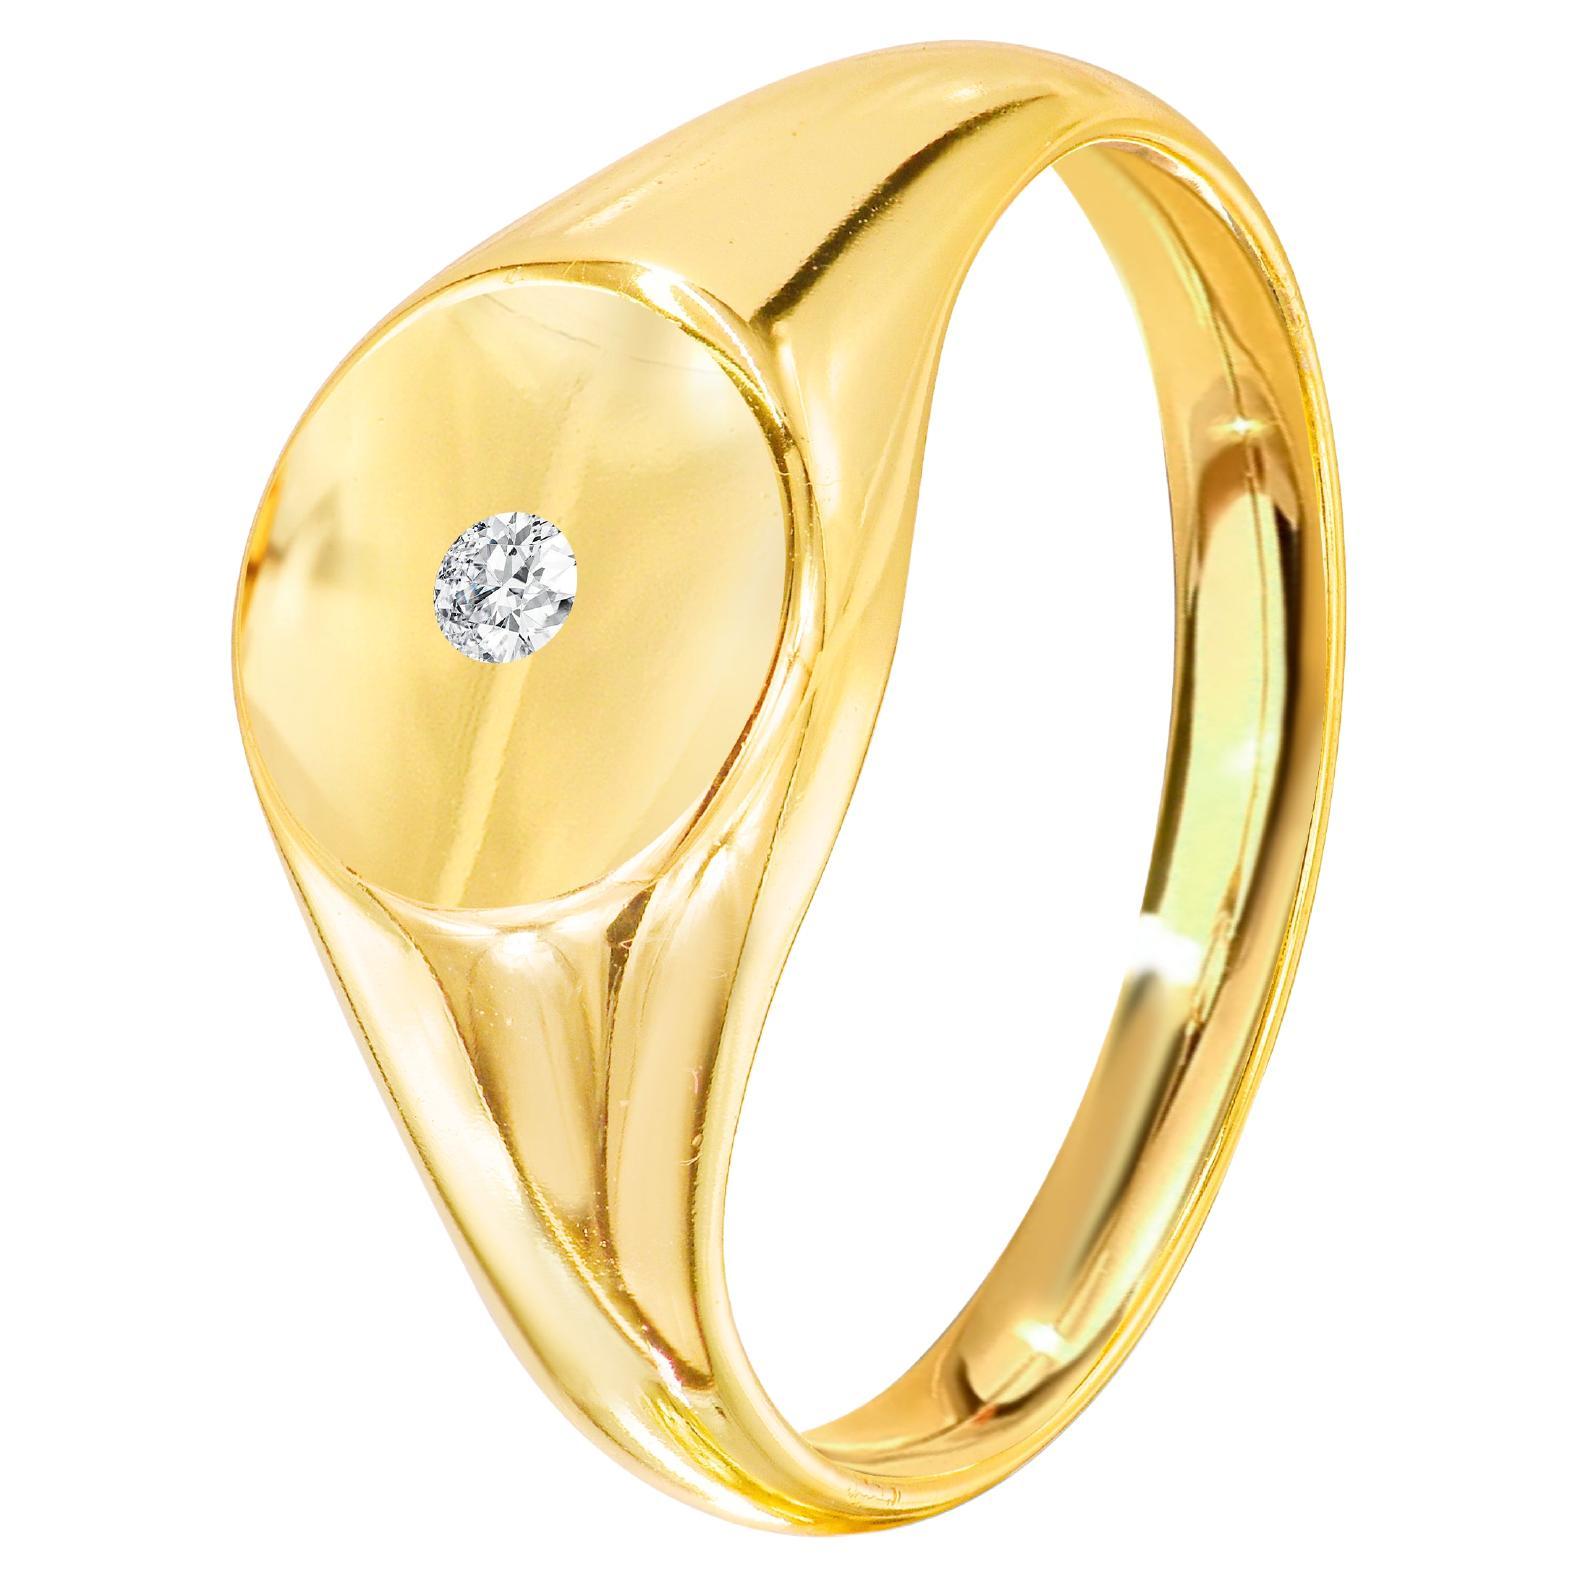 For Sale:  18K Genuine Gold Filled Natural 0.035 Carat Diamond Signet Ring